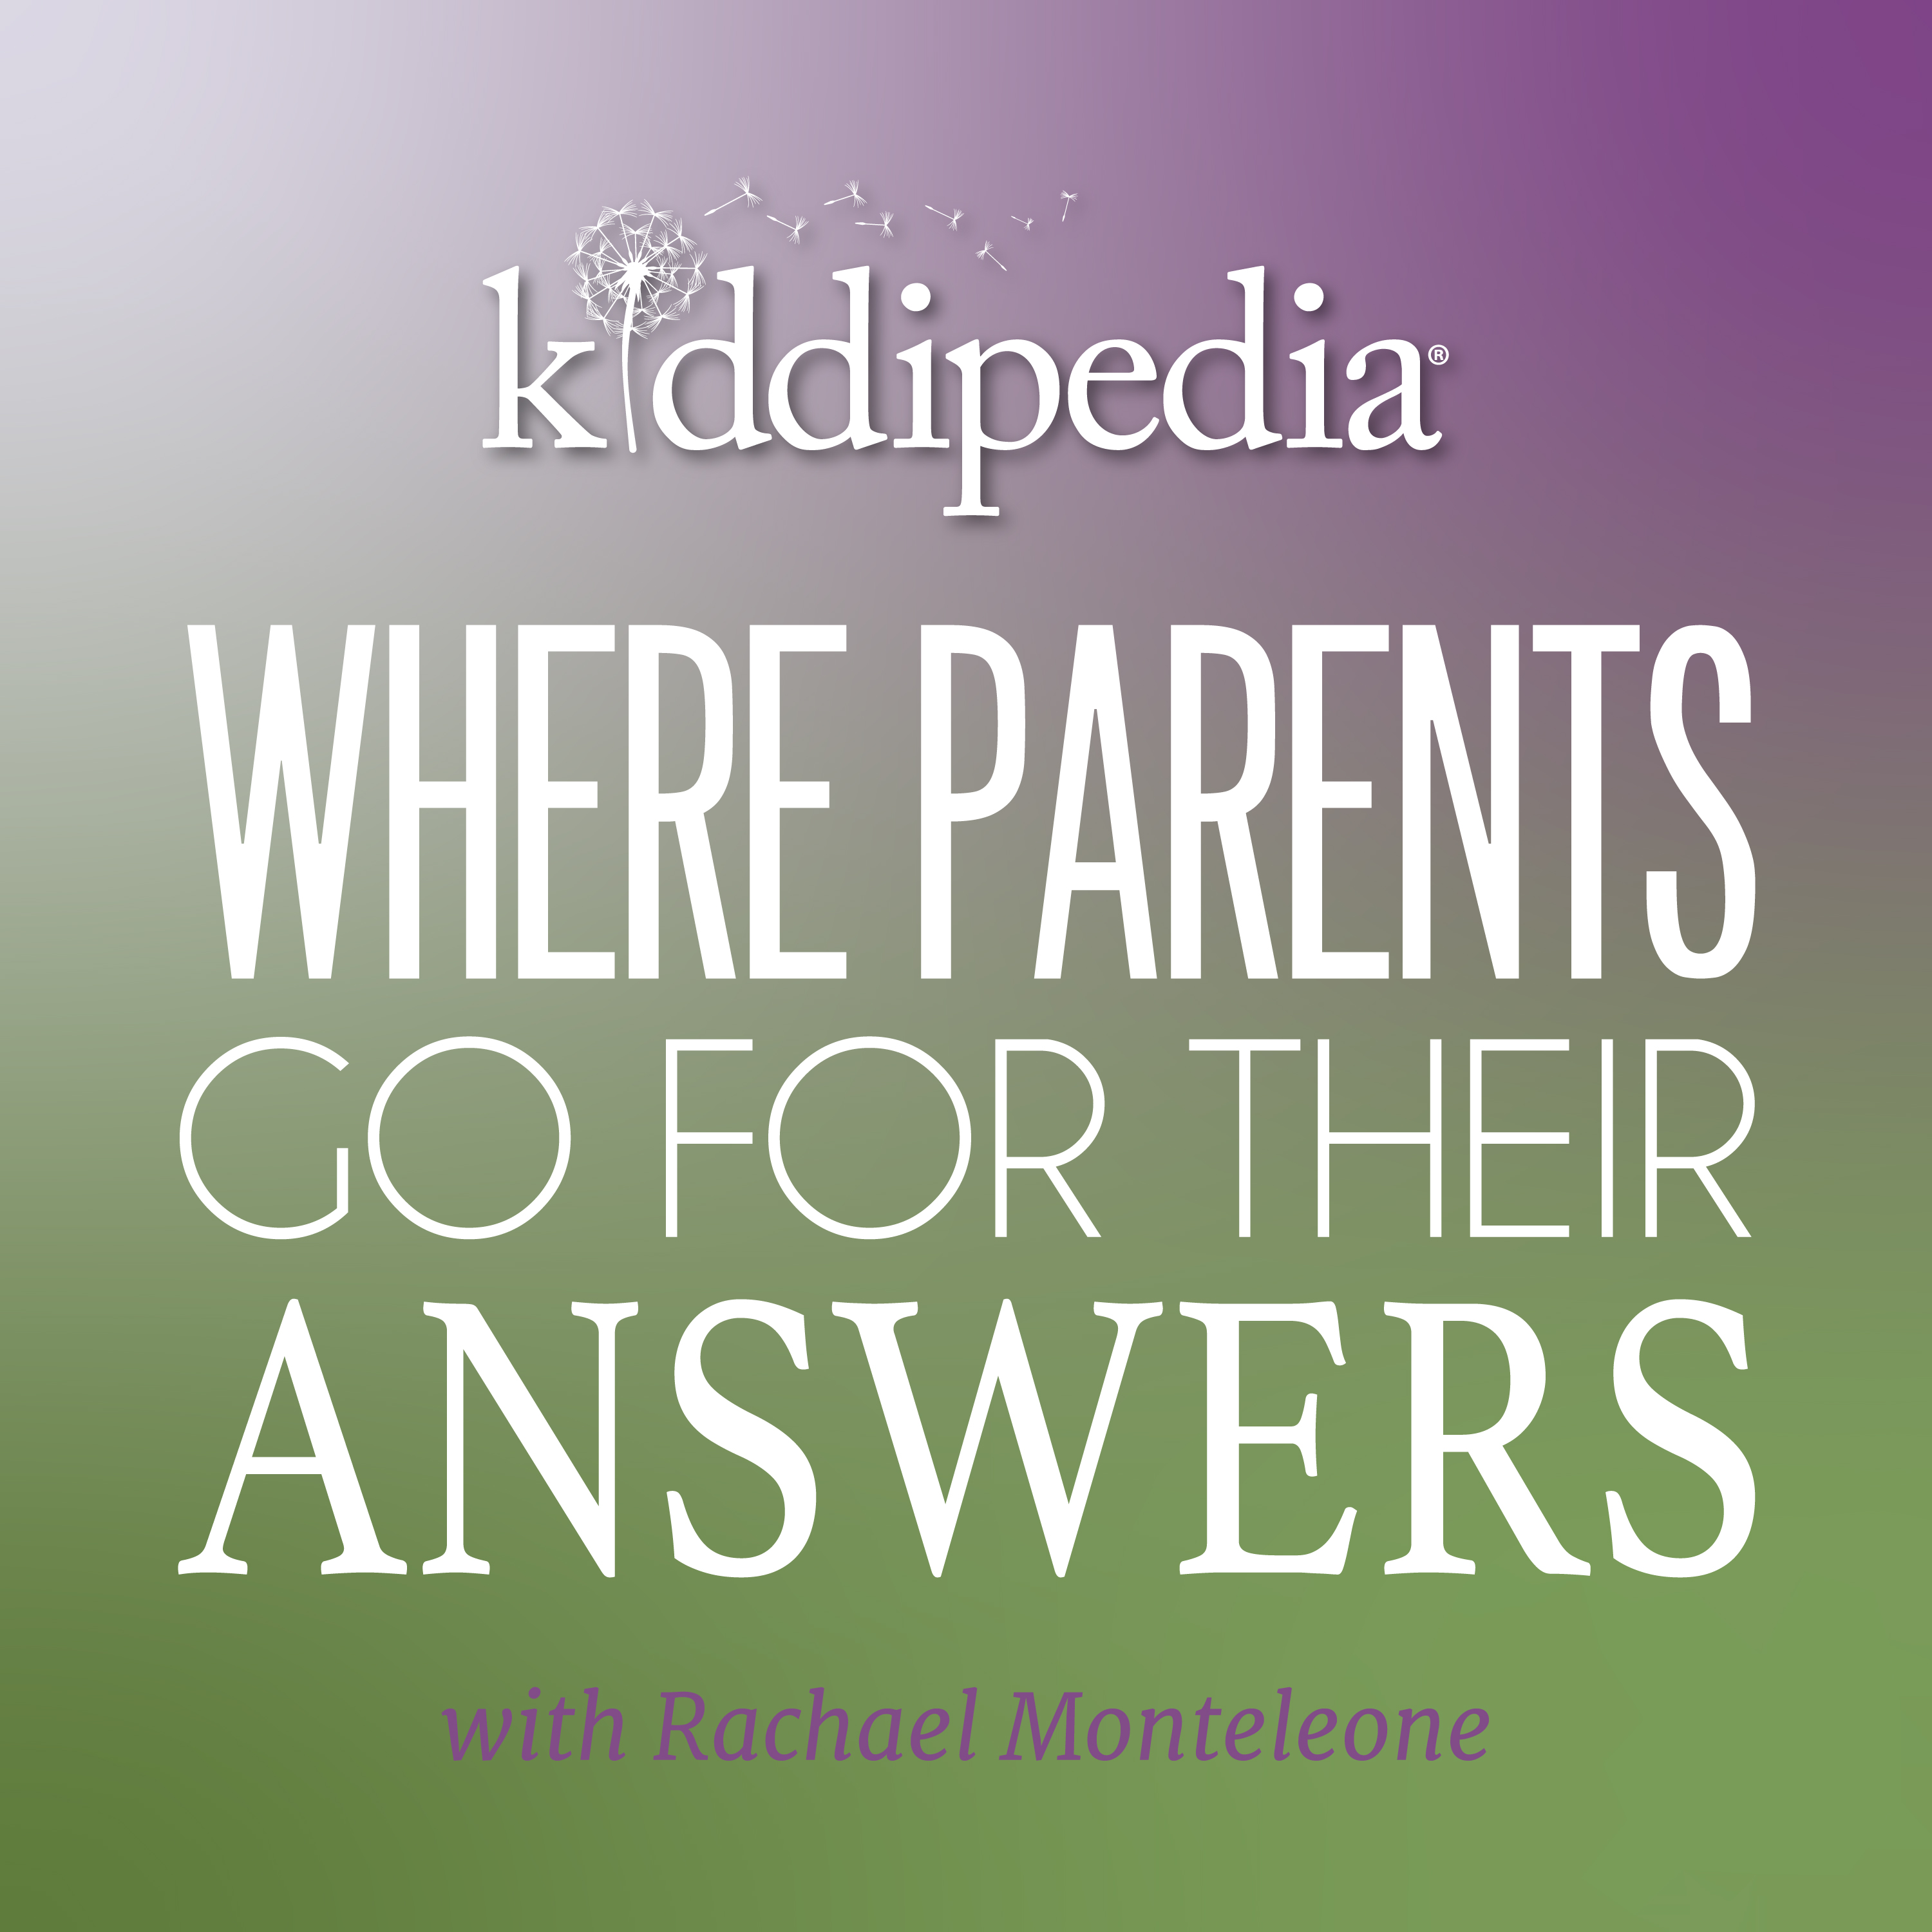 Ep 83: Top 10 Tips For Step Parents  I Karalee Katsambanis